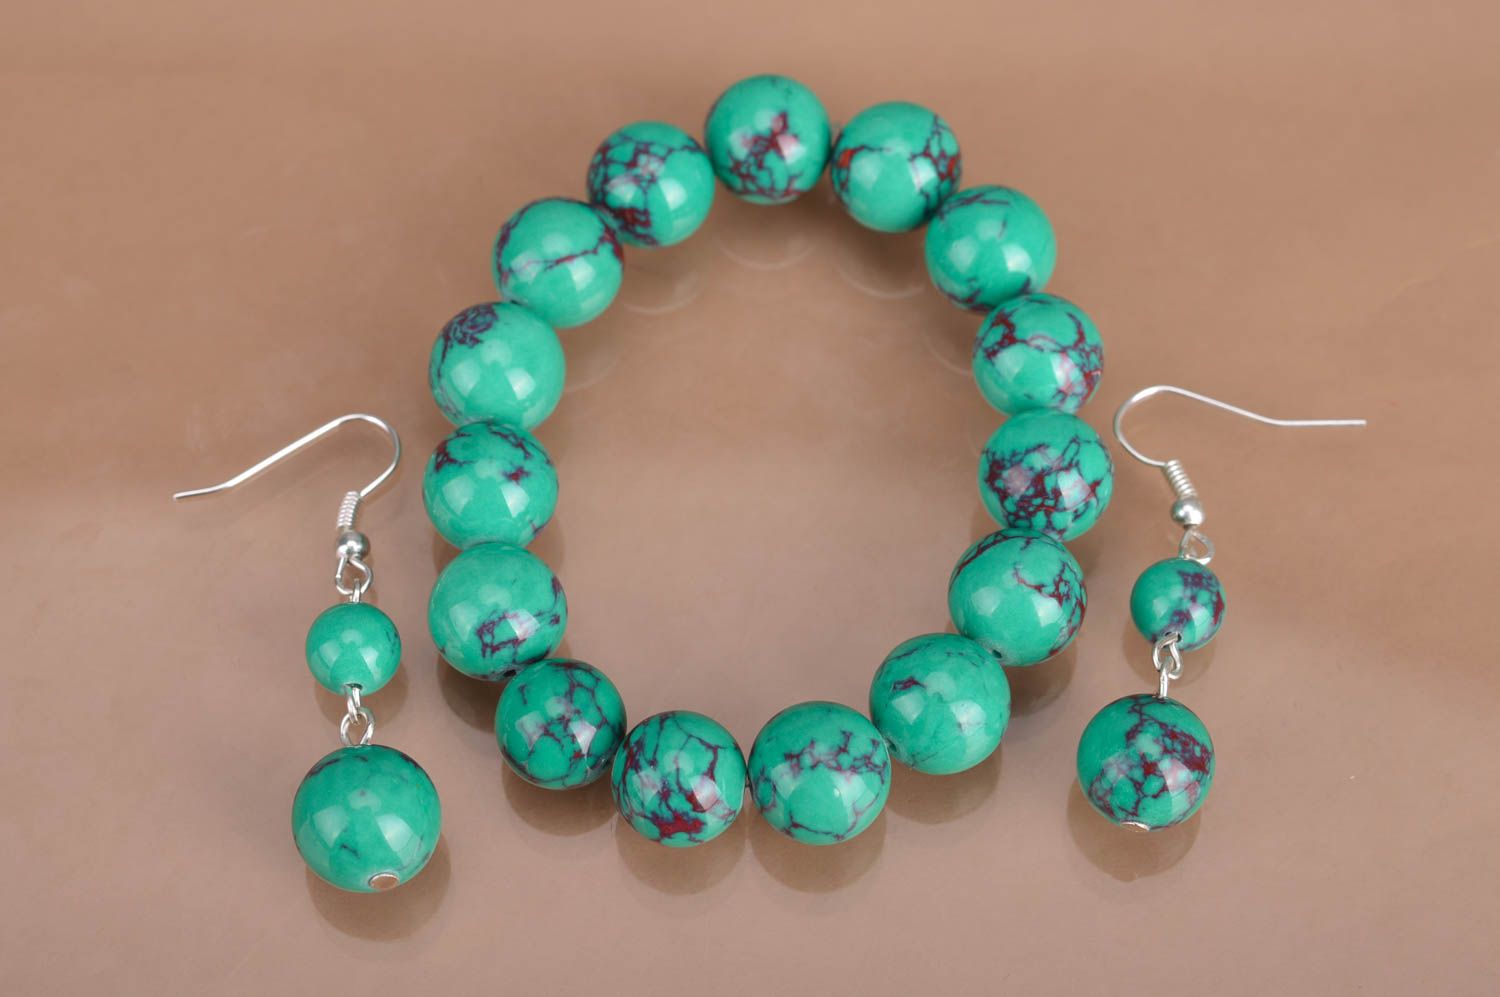 Handmade designer turquoise color beaded jewelry set wrist bracelet and earrings photo 5